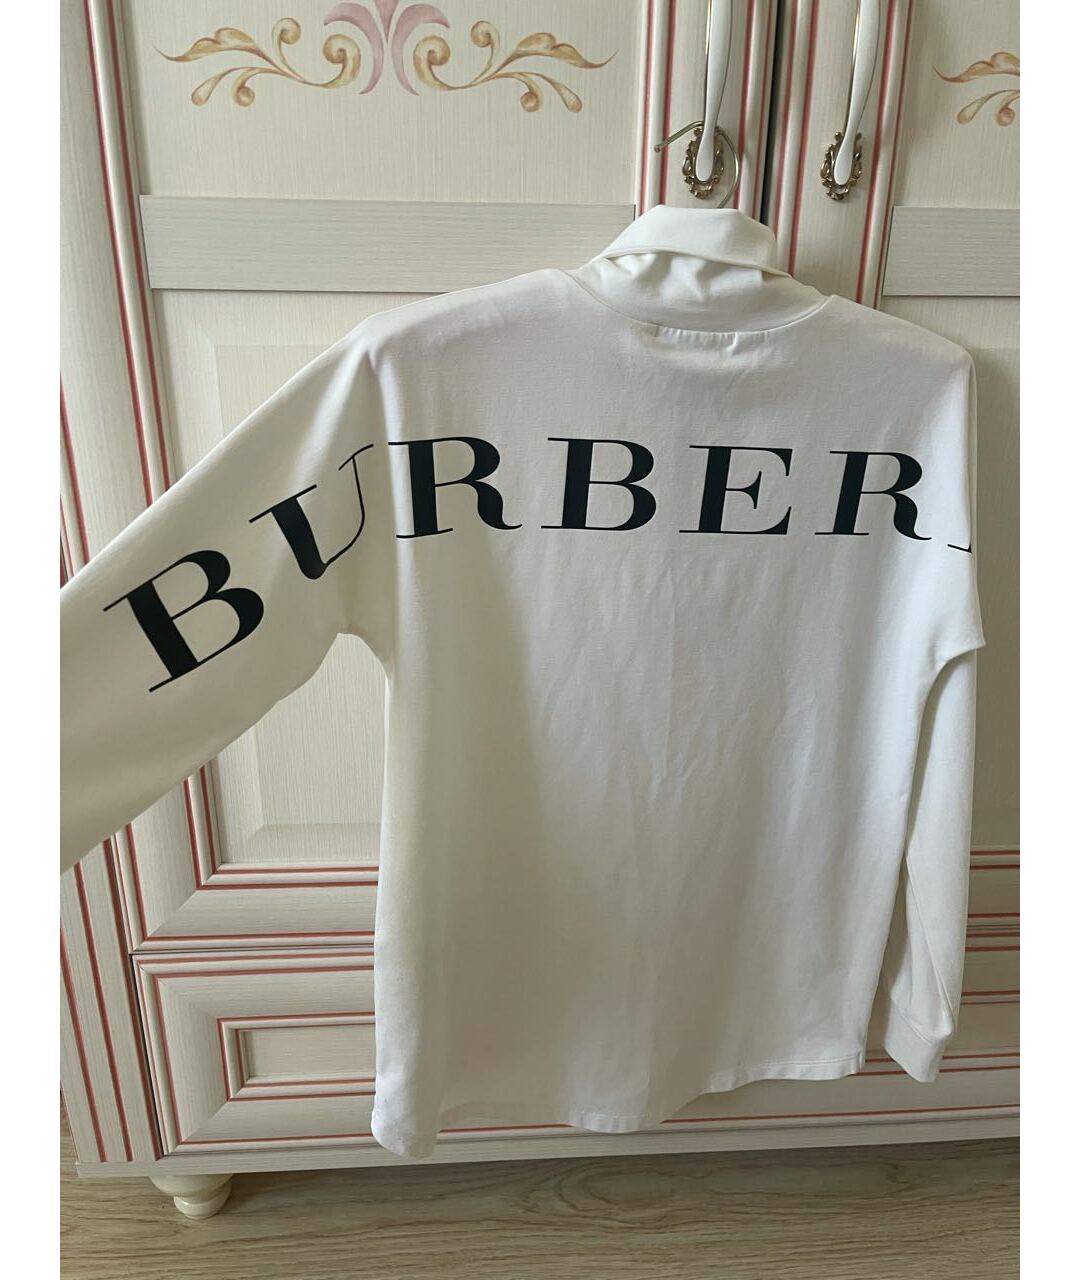 BURBERRY Белая хлопковая рубашка/блузка, фото 2